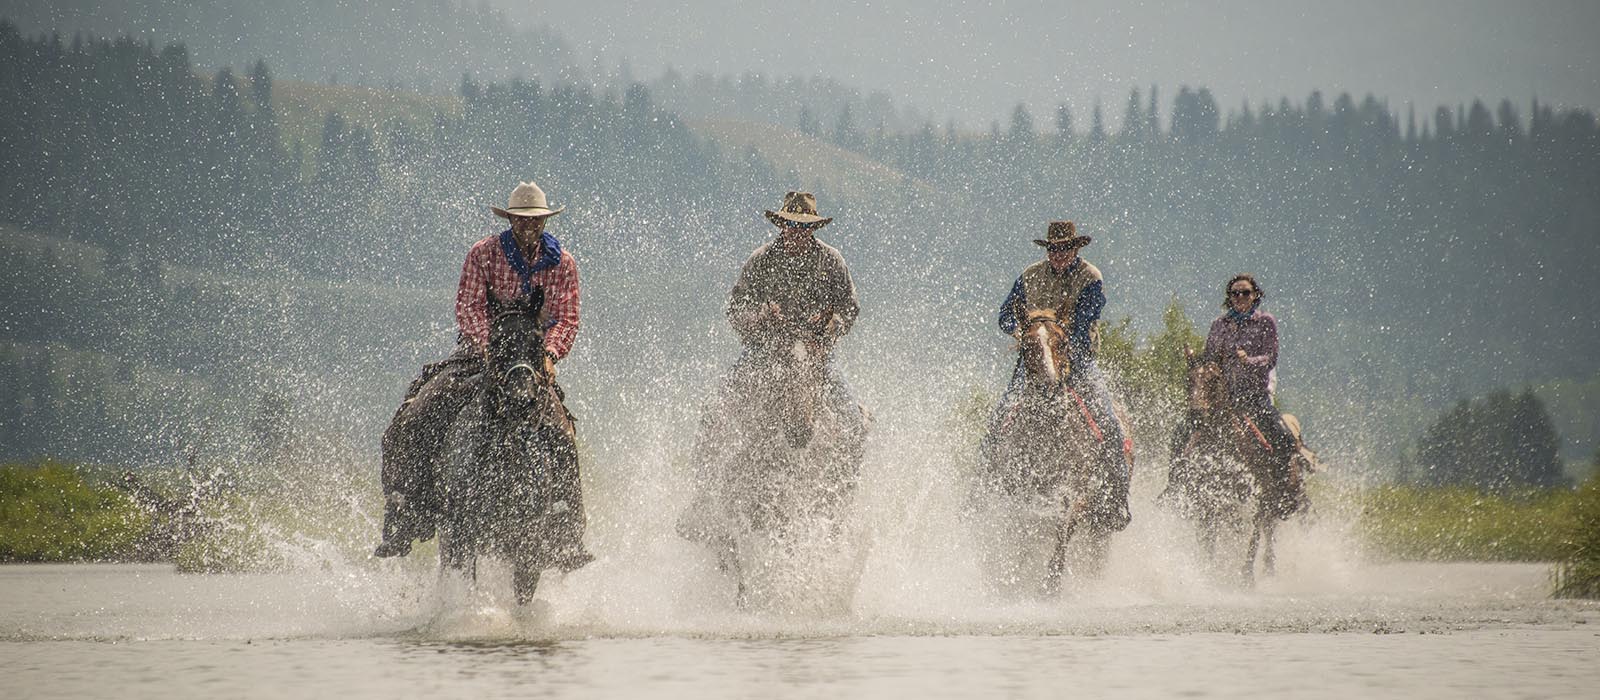 Horseback riders galloping through a river.